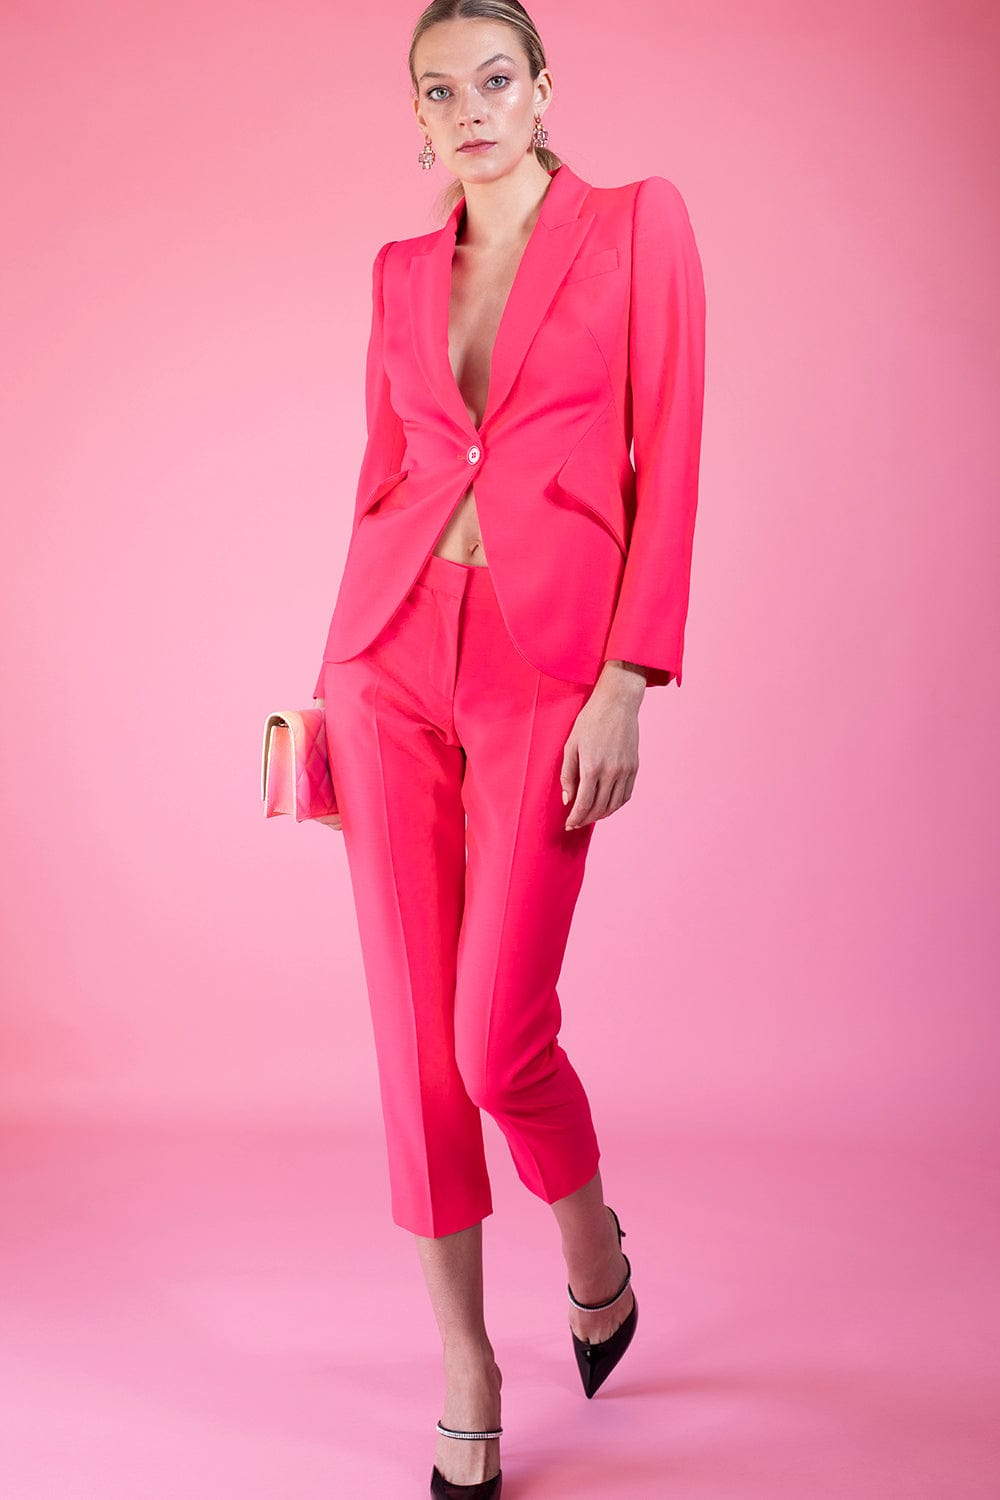 ASOS DESIGN jersey satin cigarette suit pants in pink | ASOS